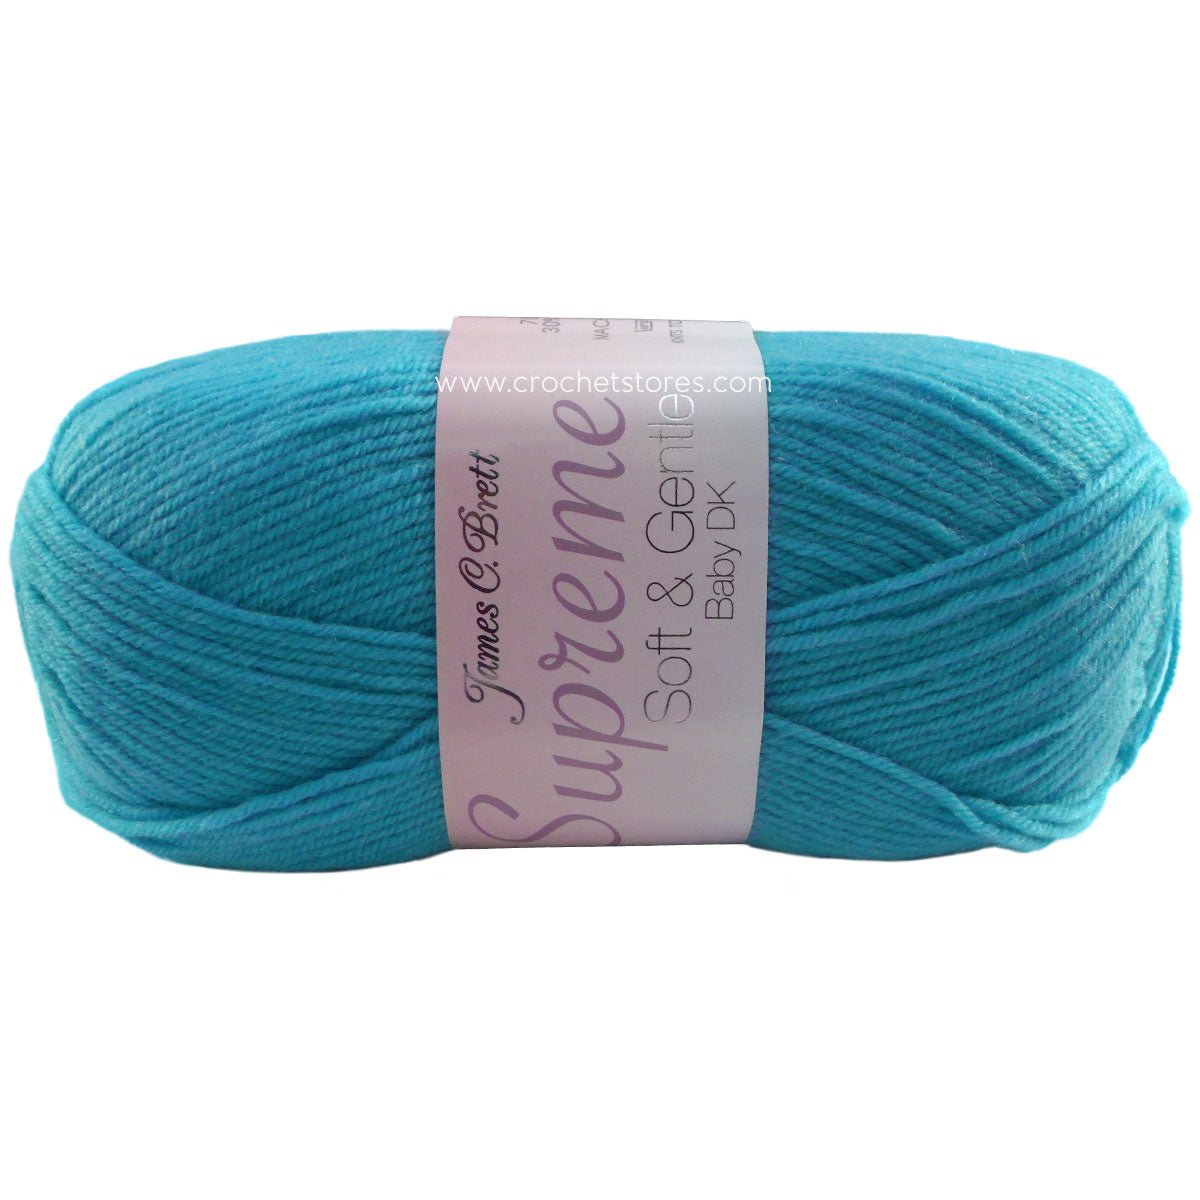 SUPREME BABY DK - CrochetstoresSNG165060019099636